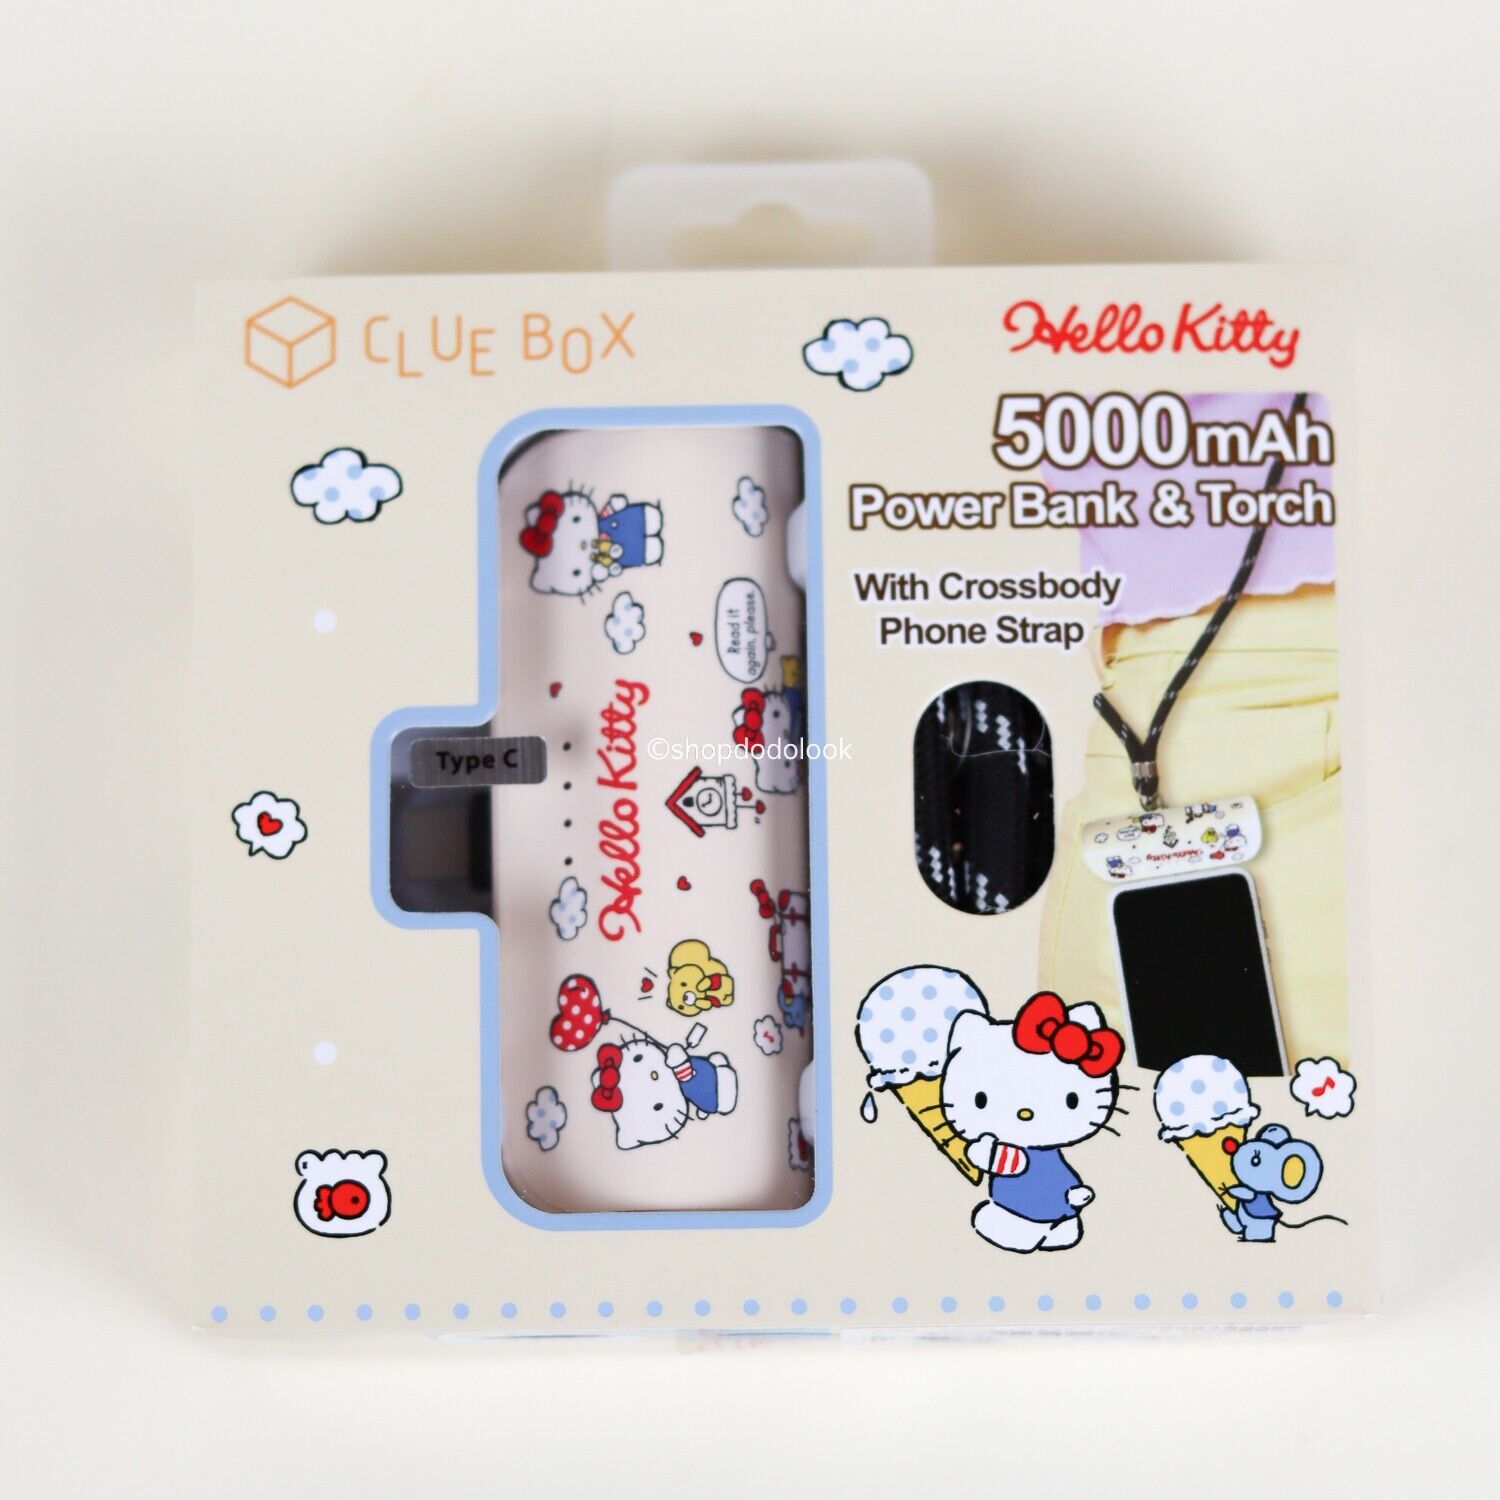 Sanrio Cluebox Hello Kitty 5000mAh Power Type C Bank&Torch 3.5\